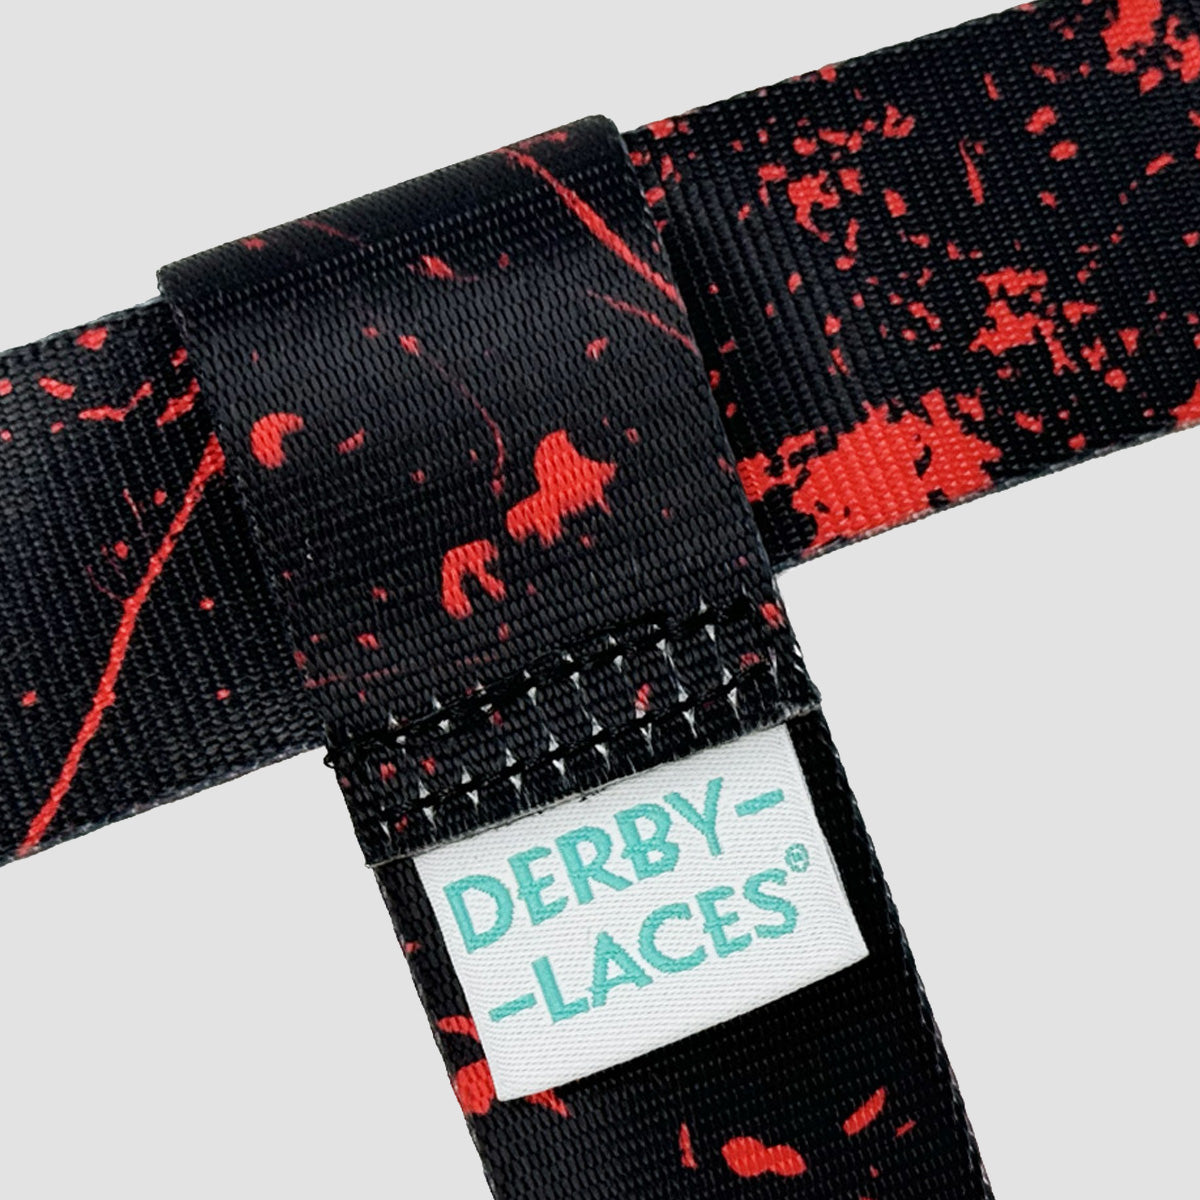 Derby Laces Skate Strap - Gear Leash Blood Spatter 198cm